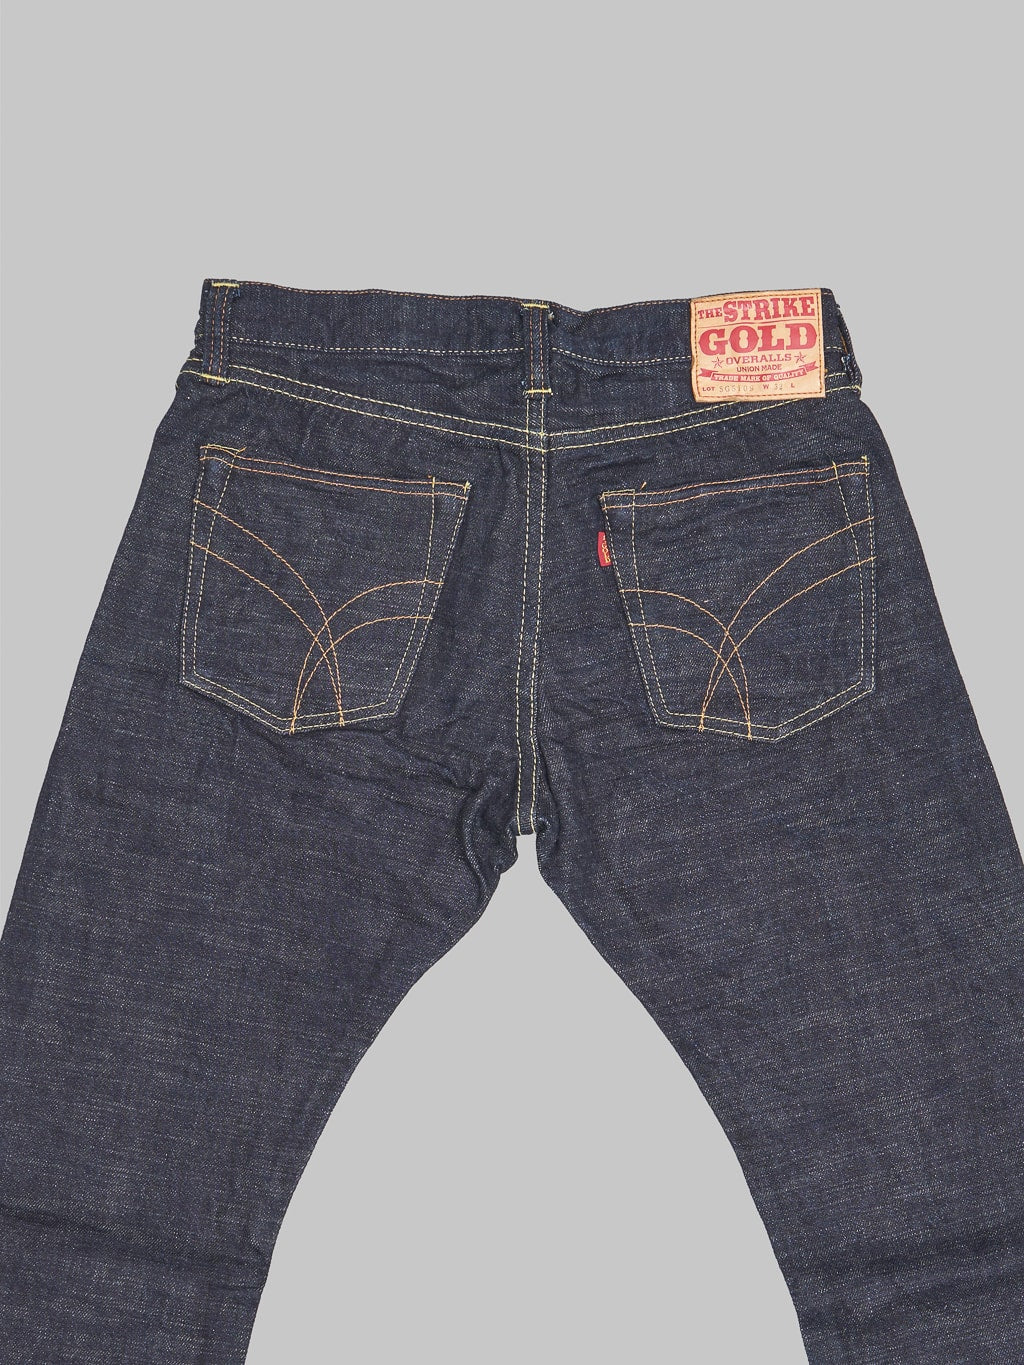 The Strike Gold 5109 15oz Slub Grey Weft Slim Tapered Jeans details